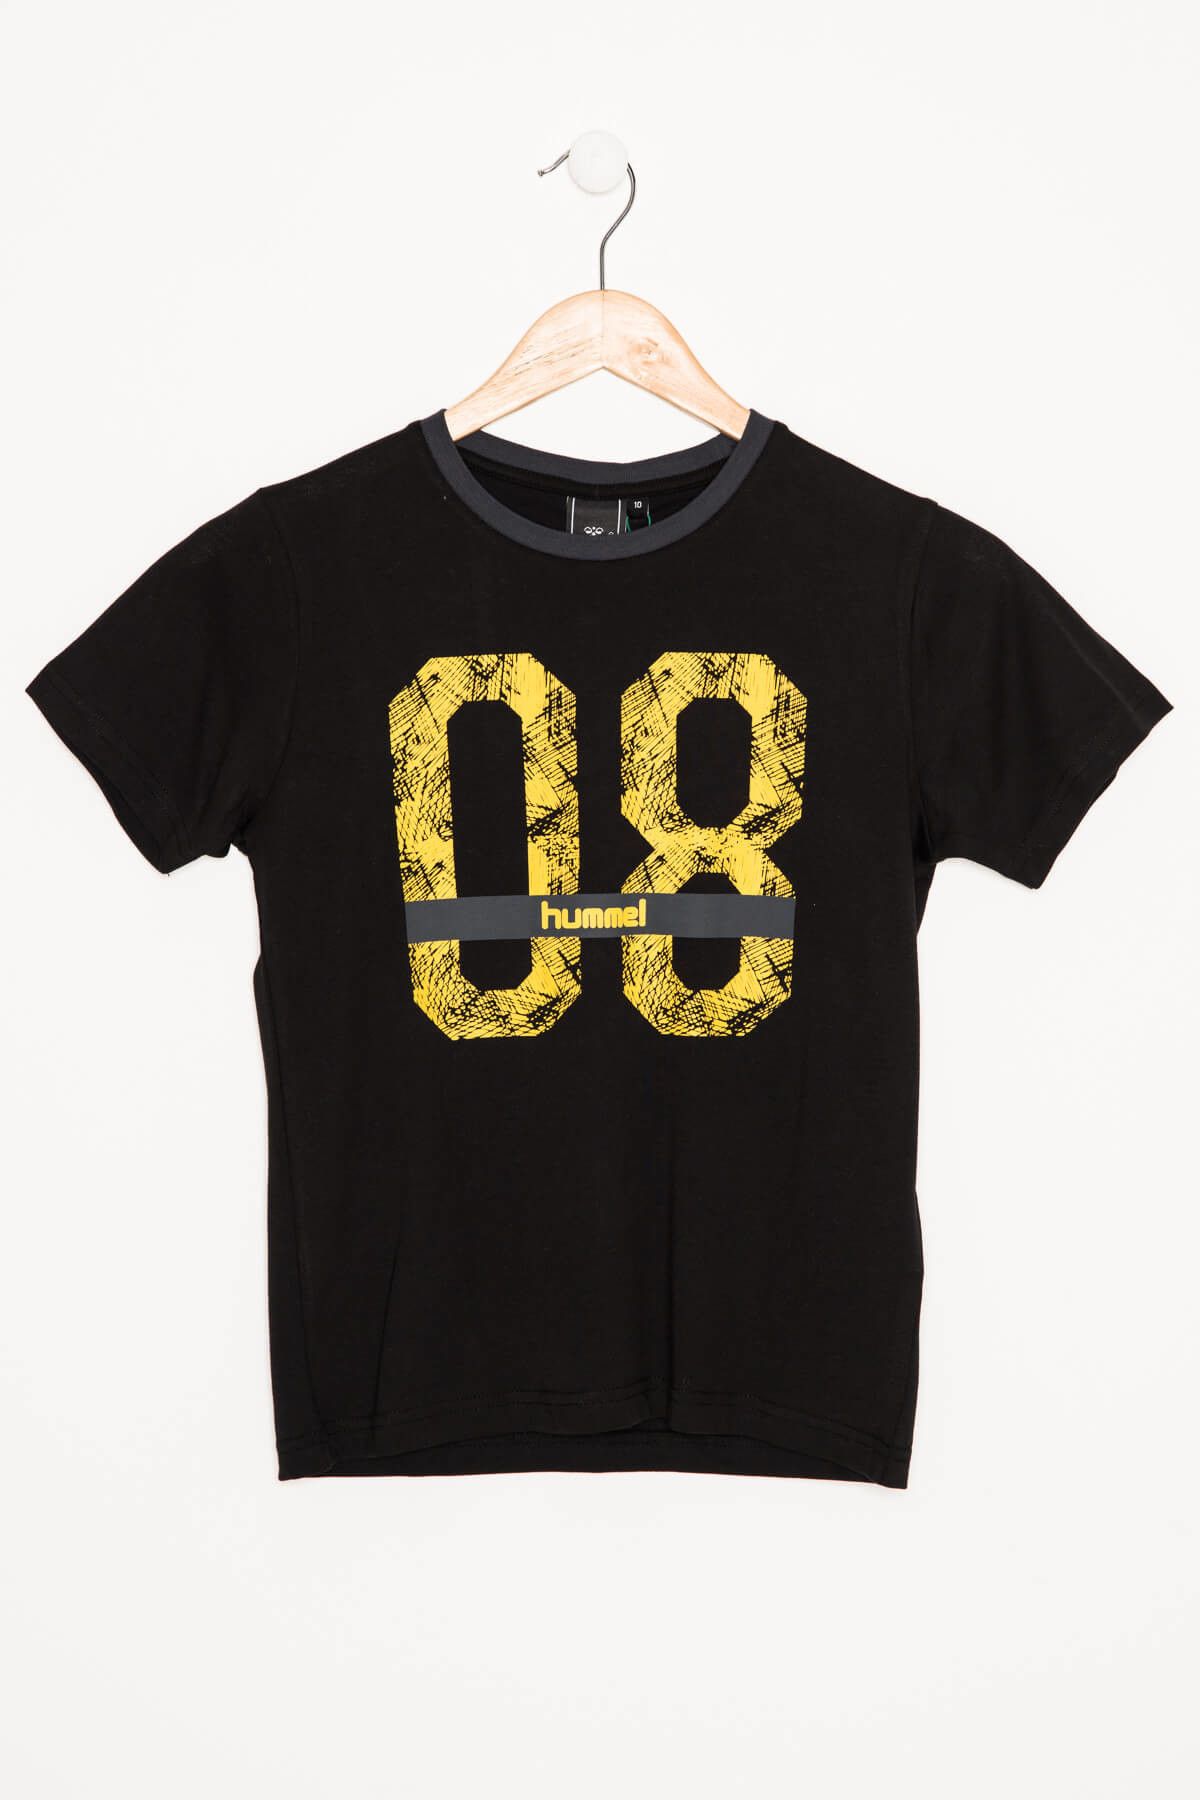 hummel Siyah Unisex Çocuk Kısa Kol T-shirt